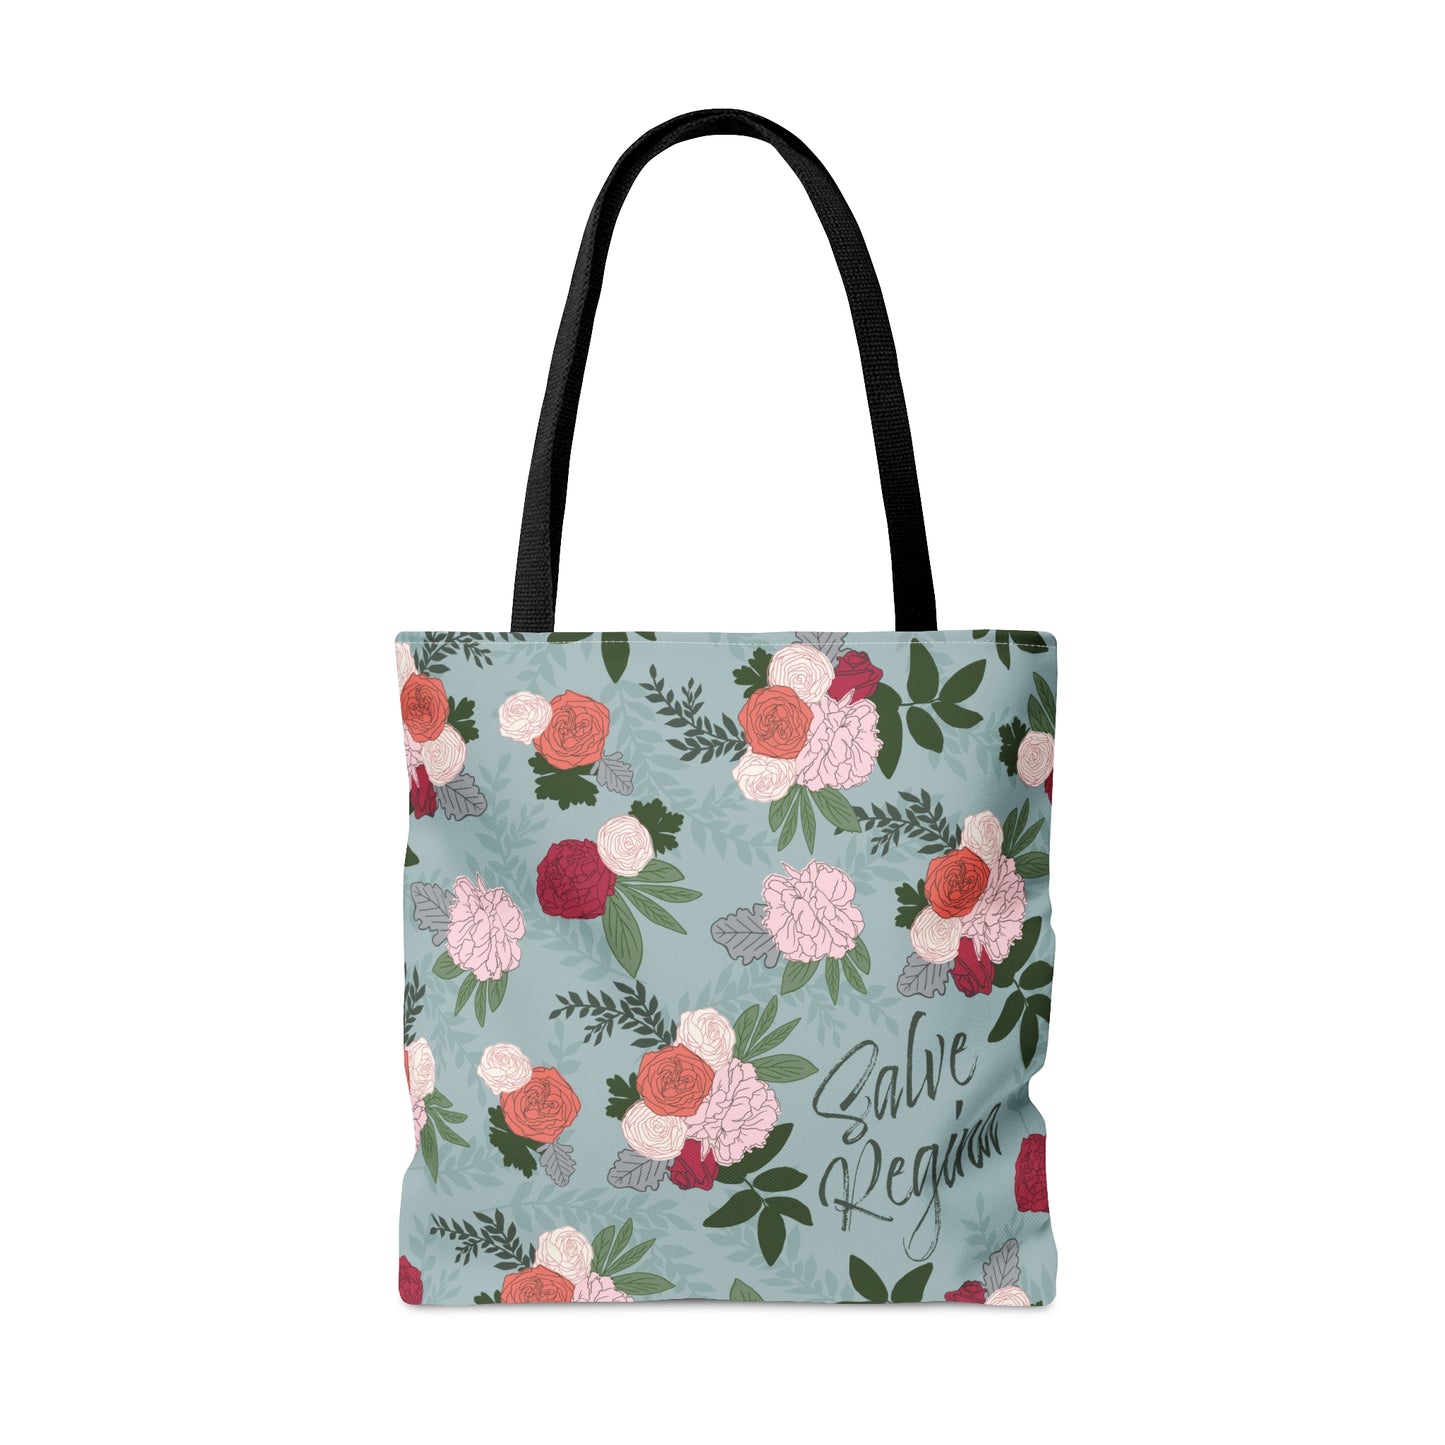 Salve Regina Floral Tote Bag